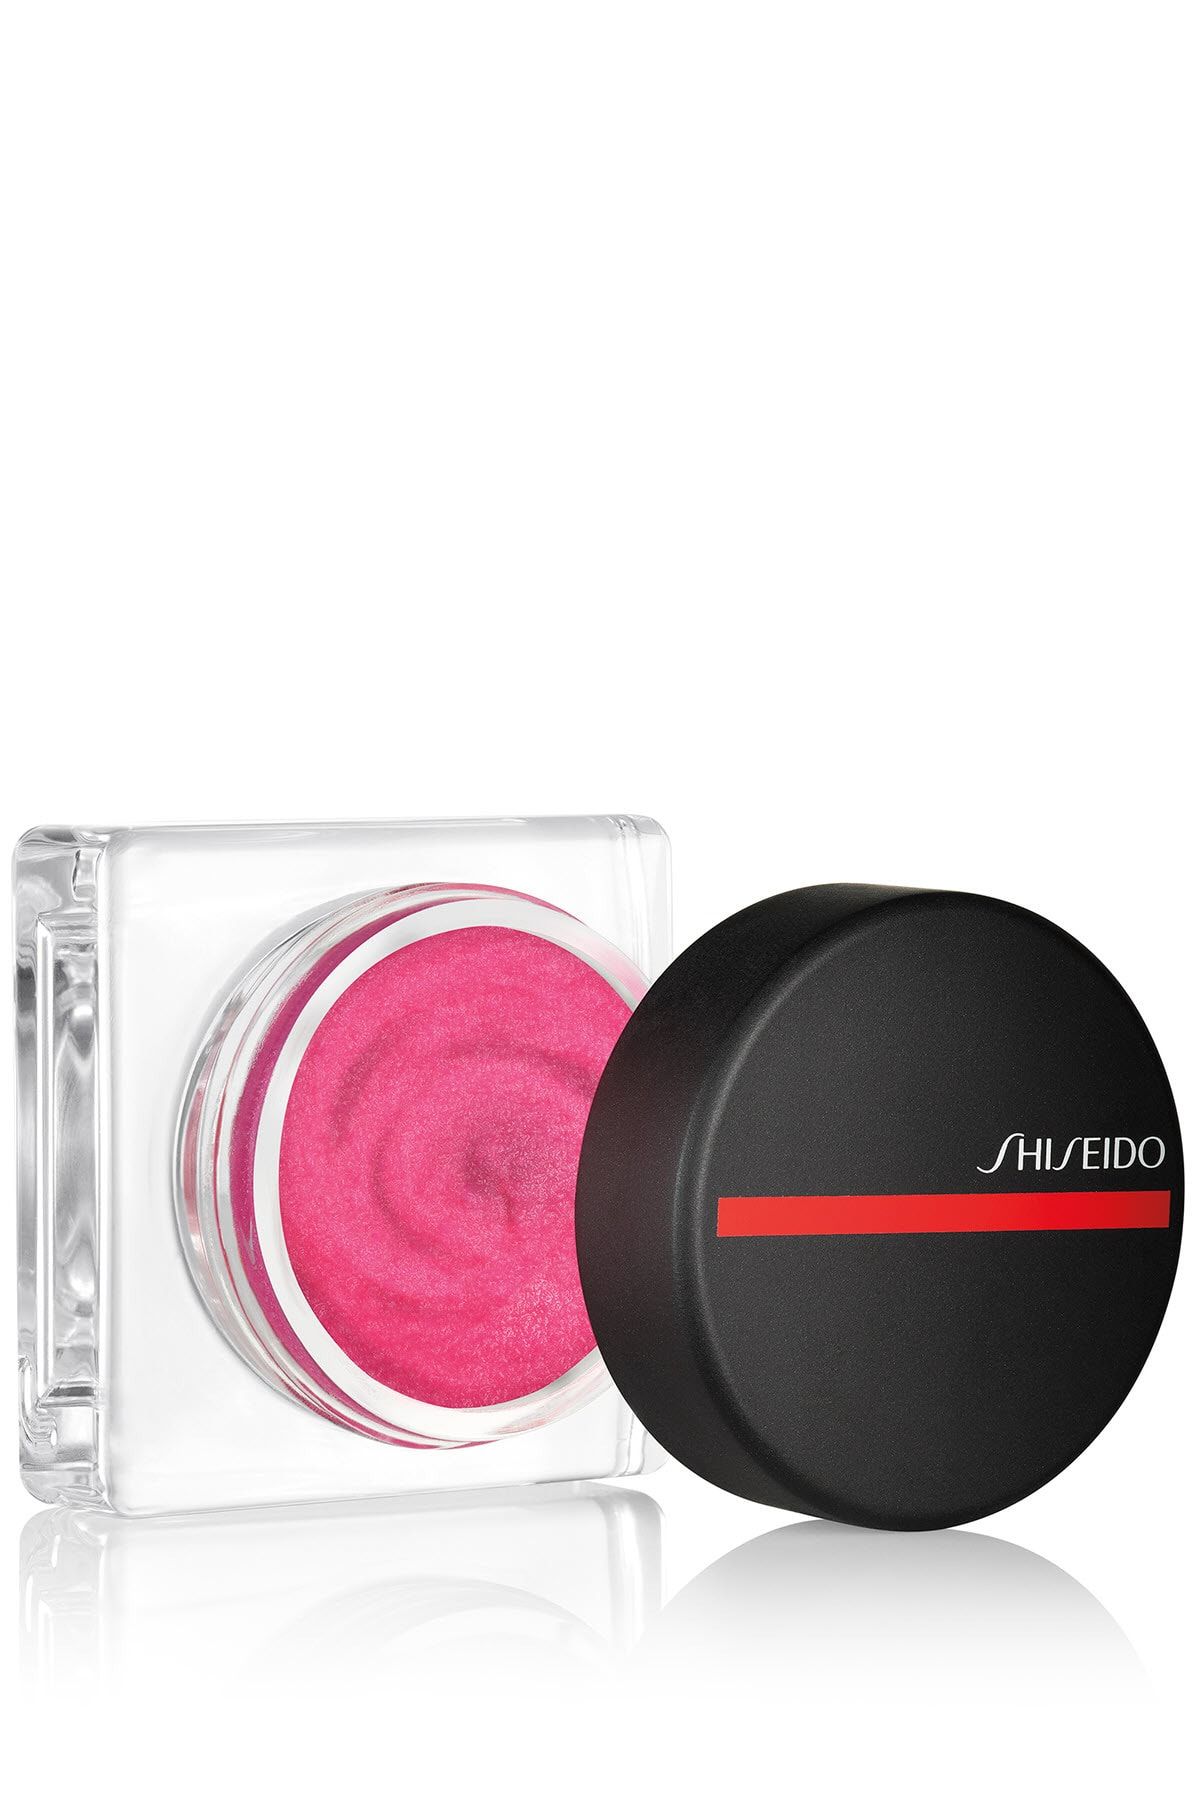 Shiseido Krem Allık - Minimalist Whippedpowder Blush 08 730852148796